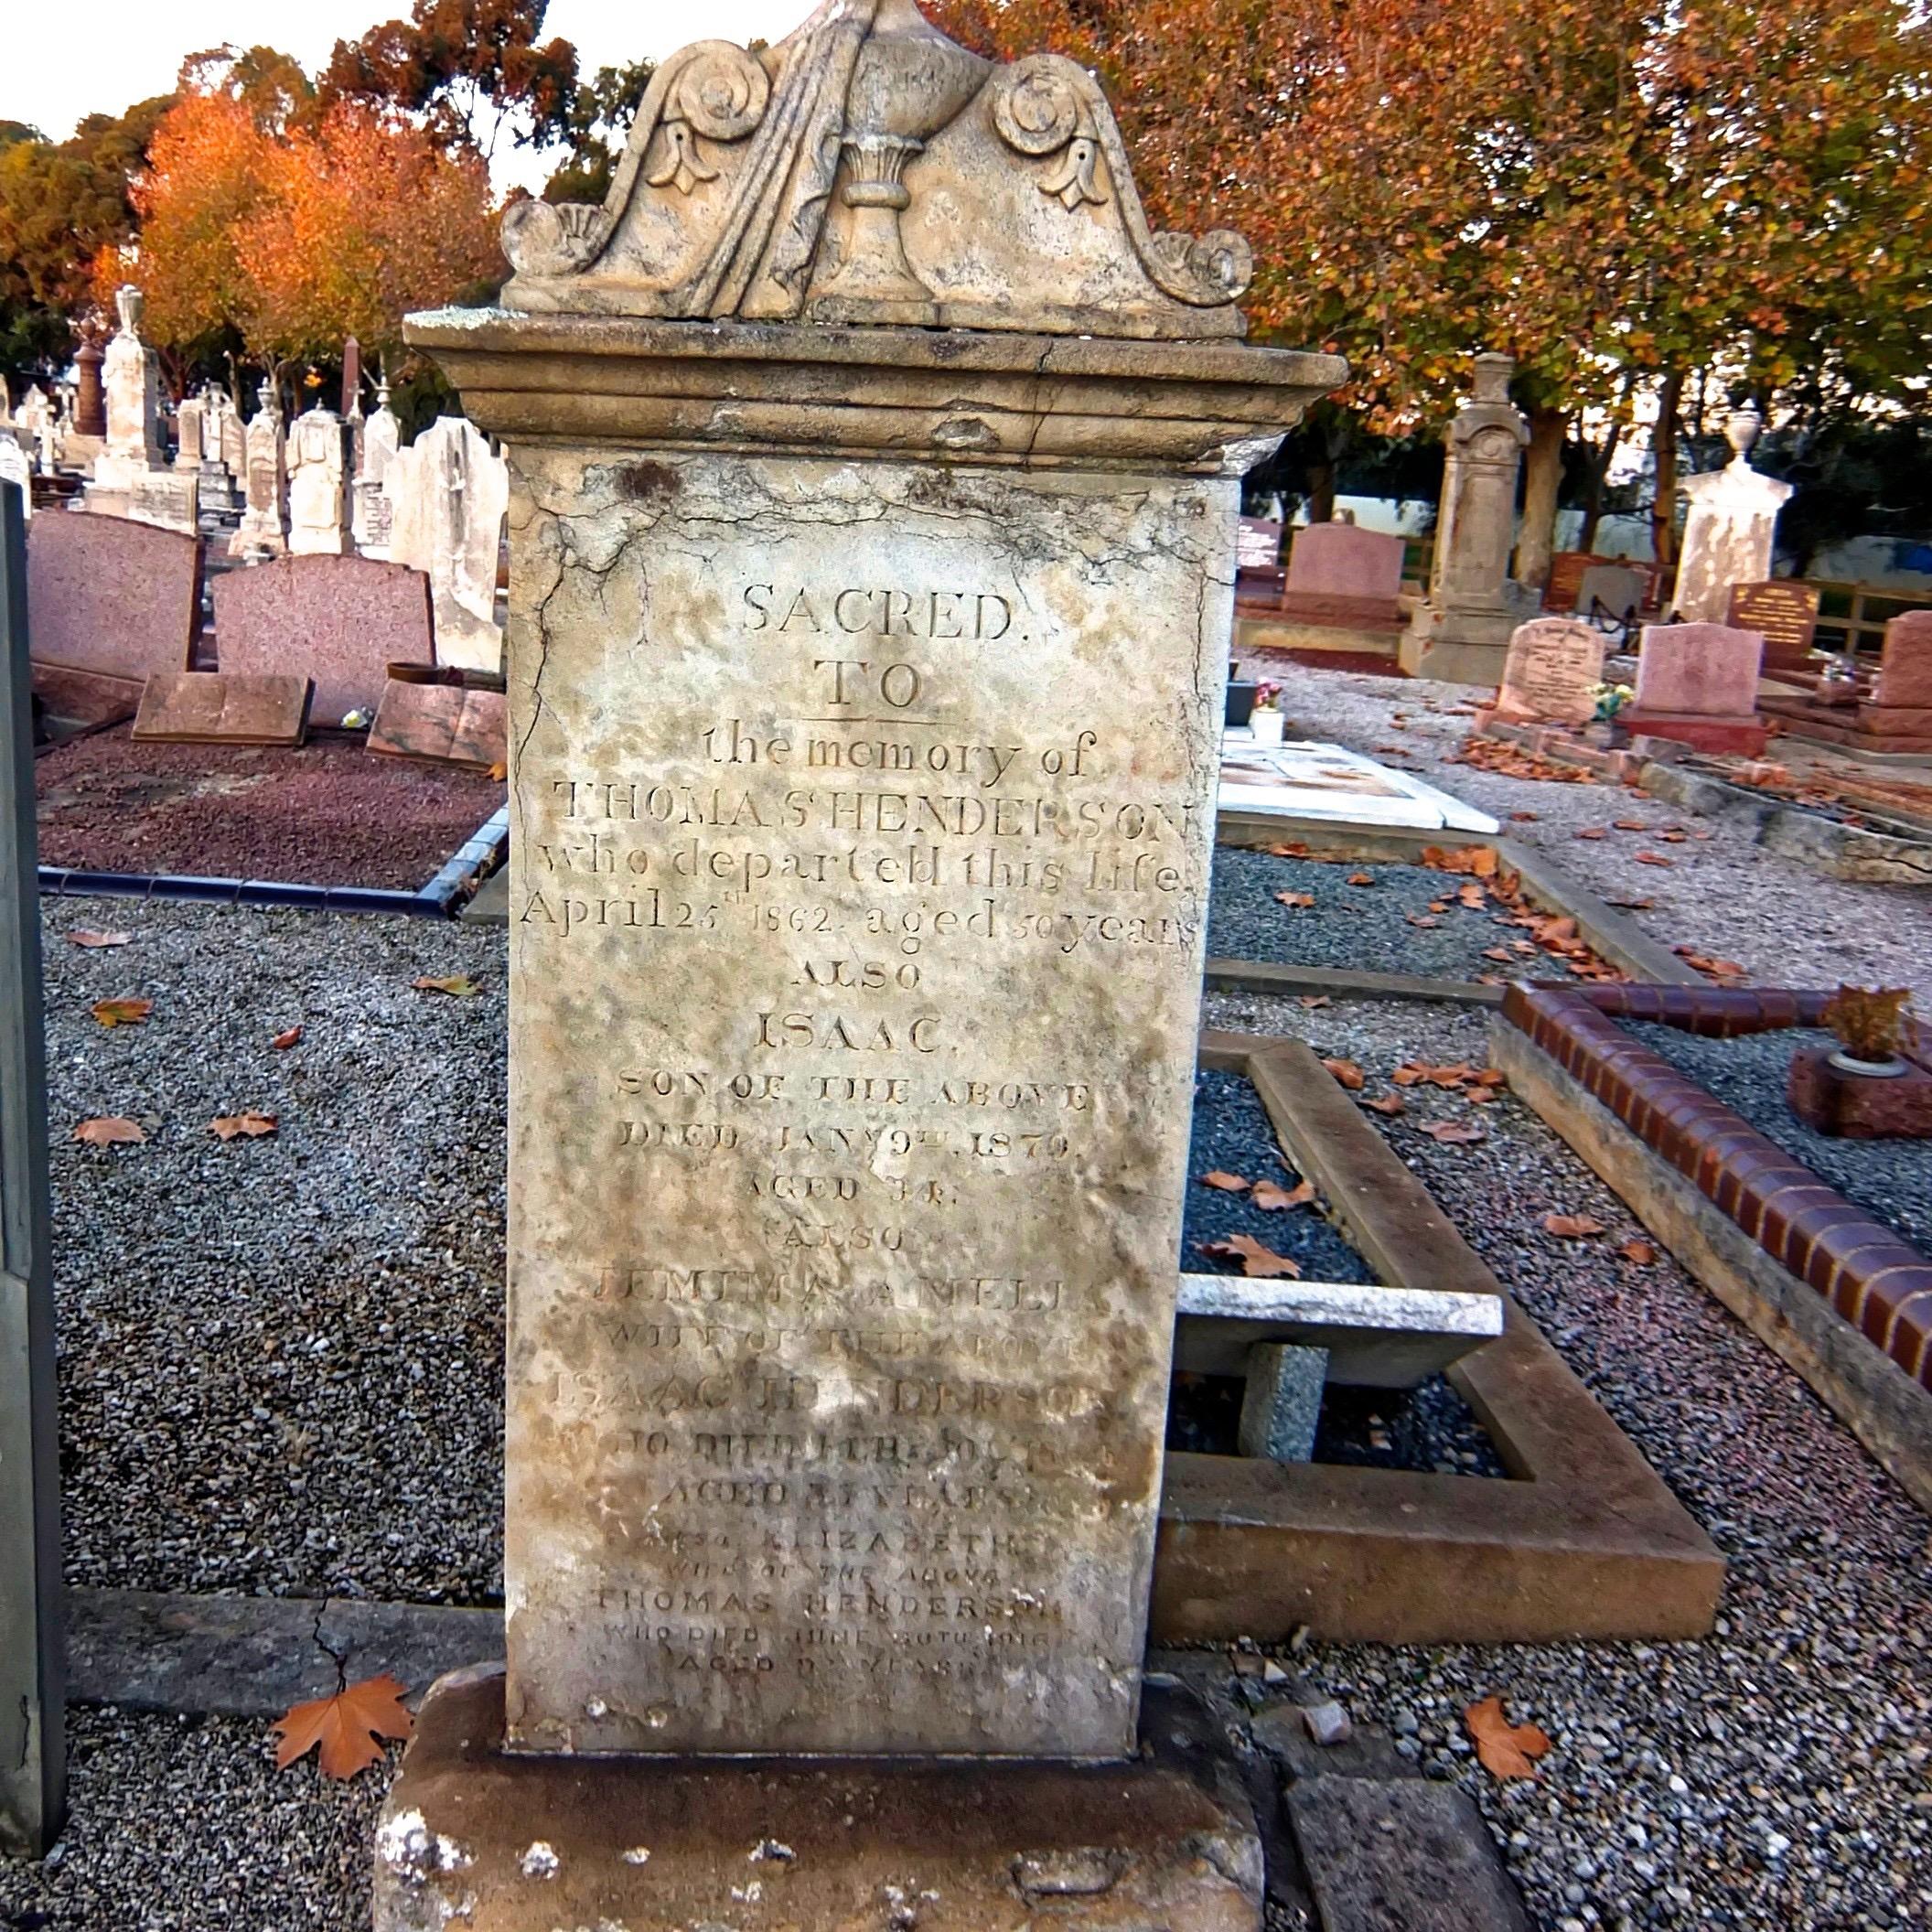 Thomas Henderson Gravestone Hindmarsh Cemetery Adelaide South Australia, Upper A 25:26.